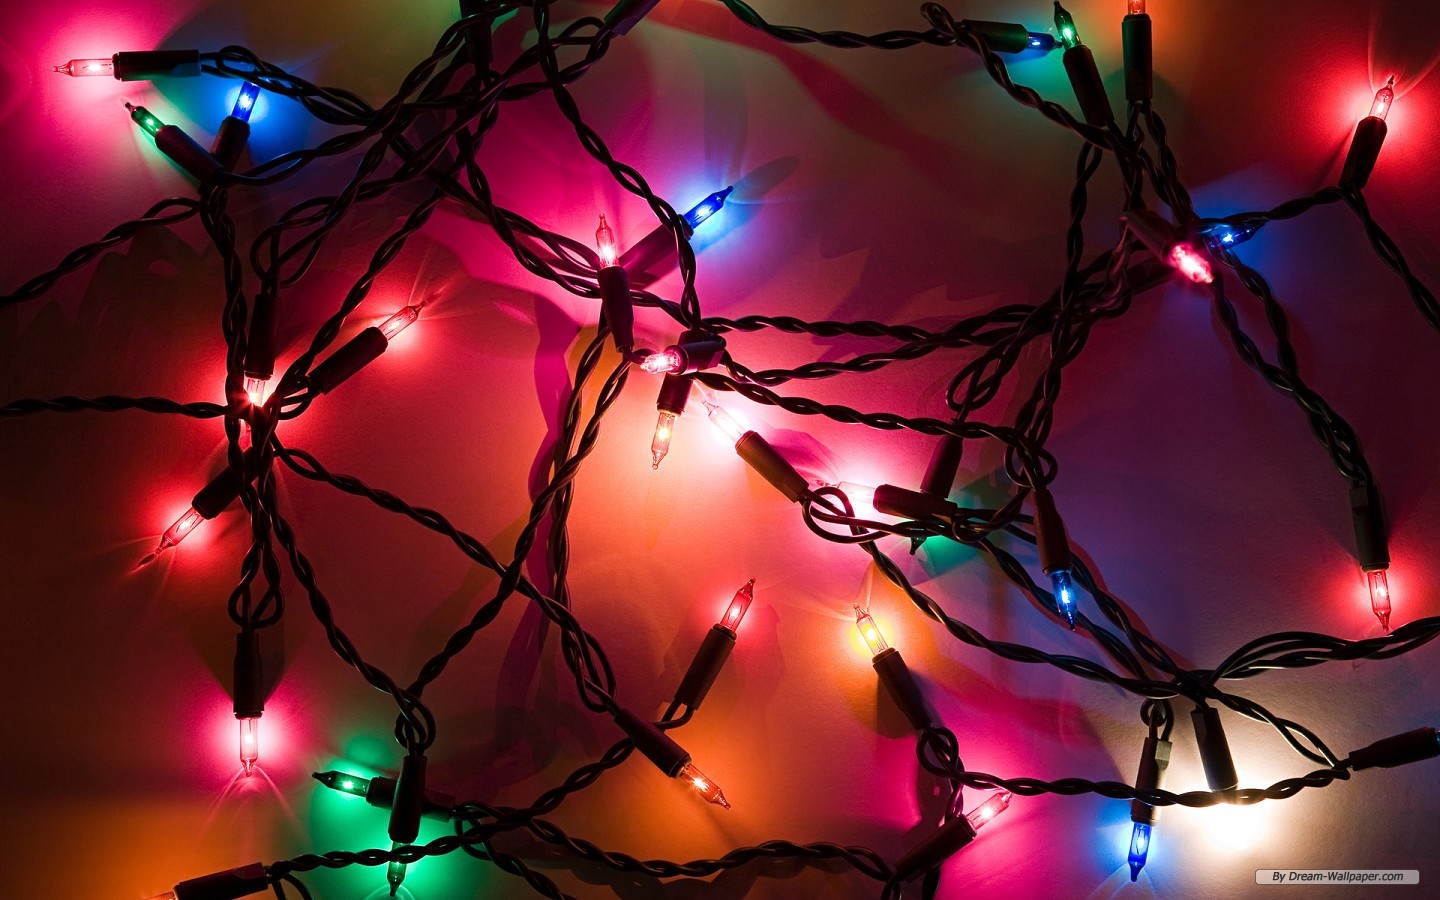 Free Holiday Wallpaper - Christmas Lights Desktop Background - HD Wallpaper 